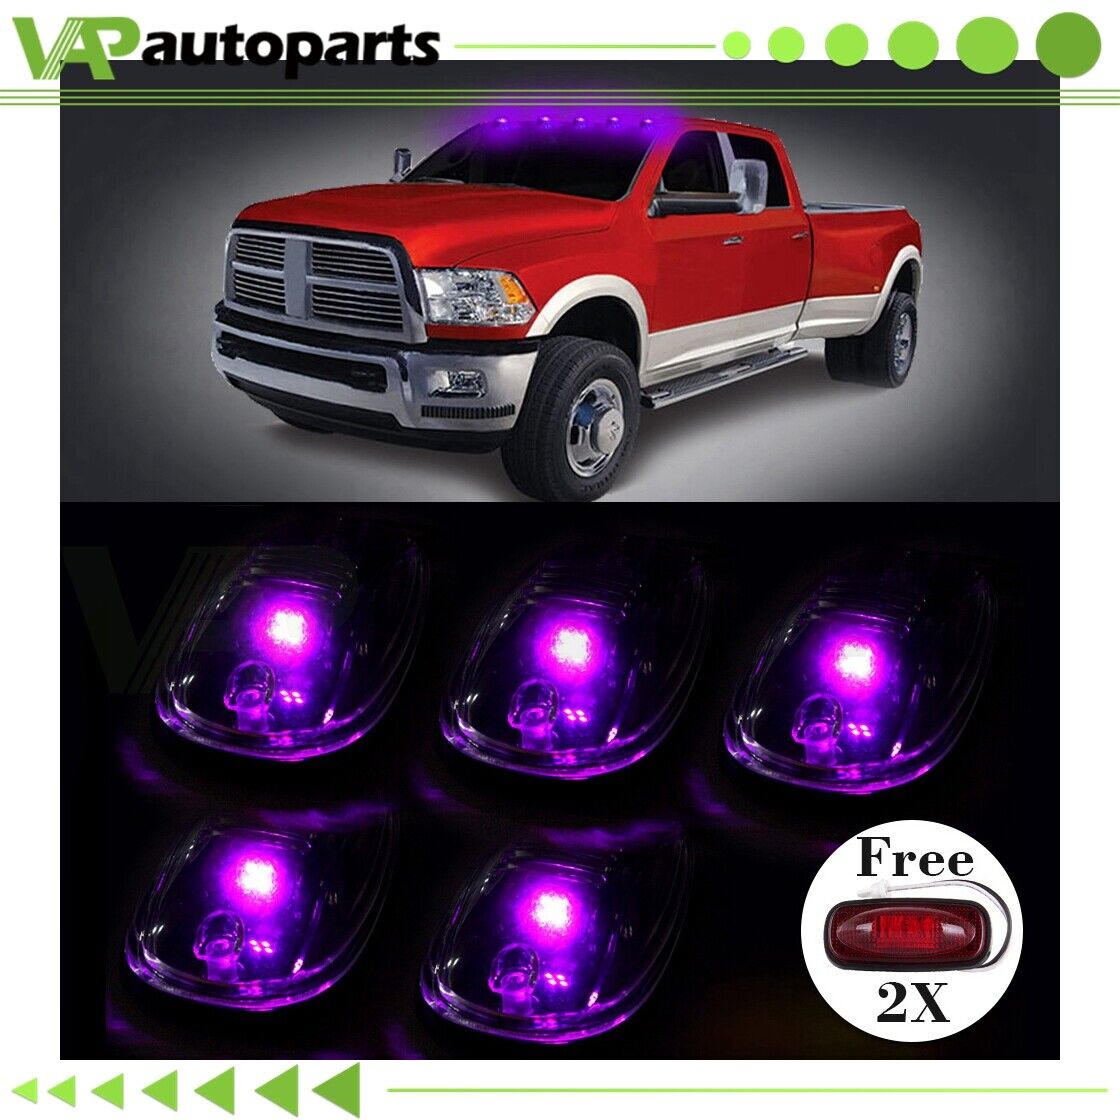 5PCS of Purple Cab Marker Lights For 2003-2016 Dodge Ram Pickup trucks